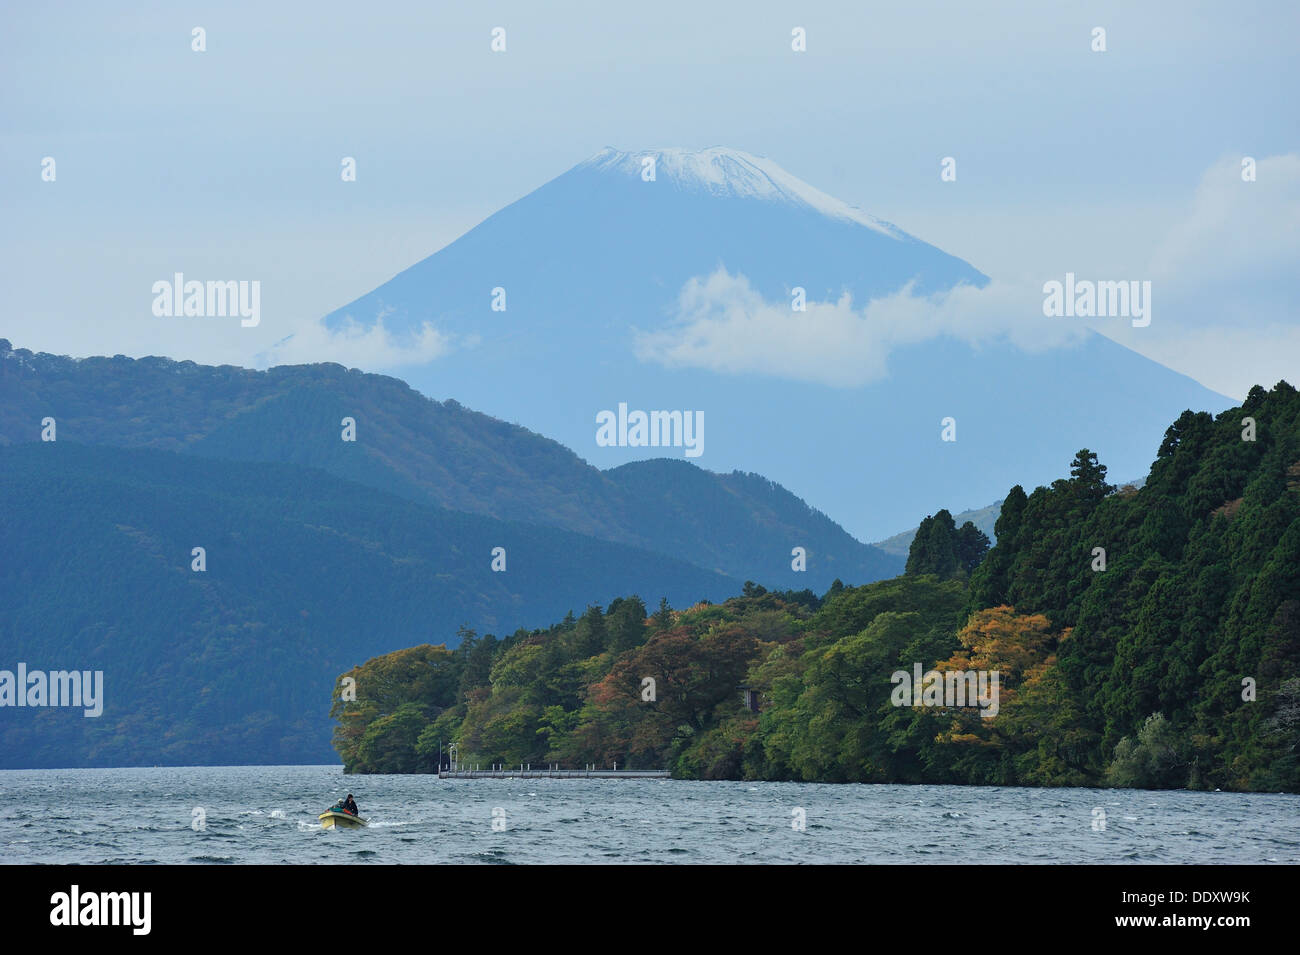 Mount Fuji and Lake Ashi, Japan Stock Photo